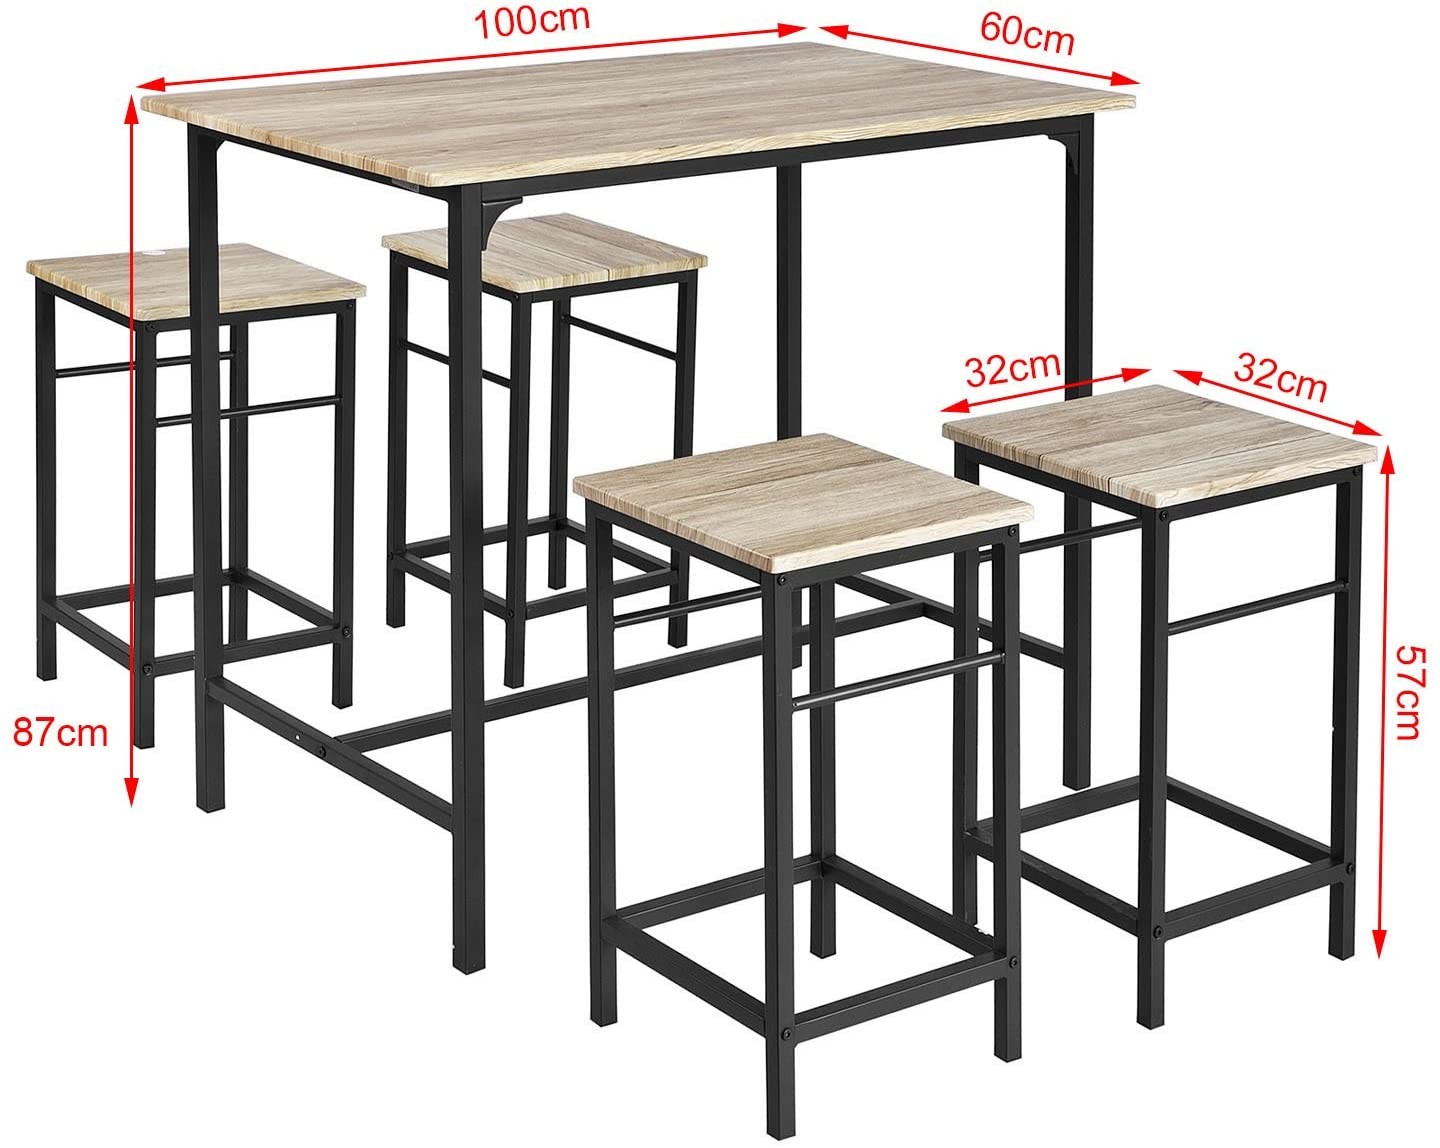 Table indus 4 tabouret dimensions